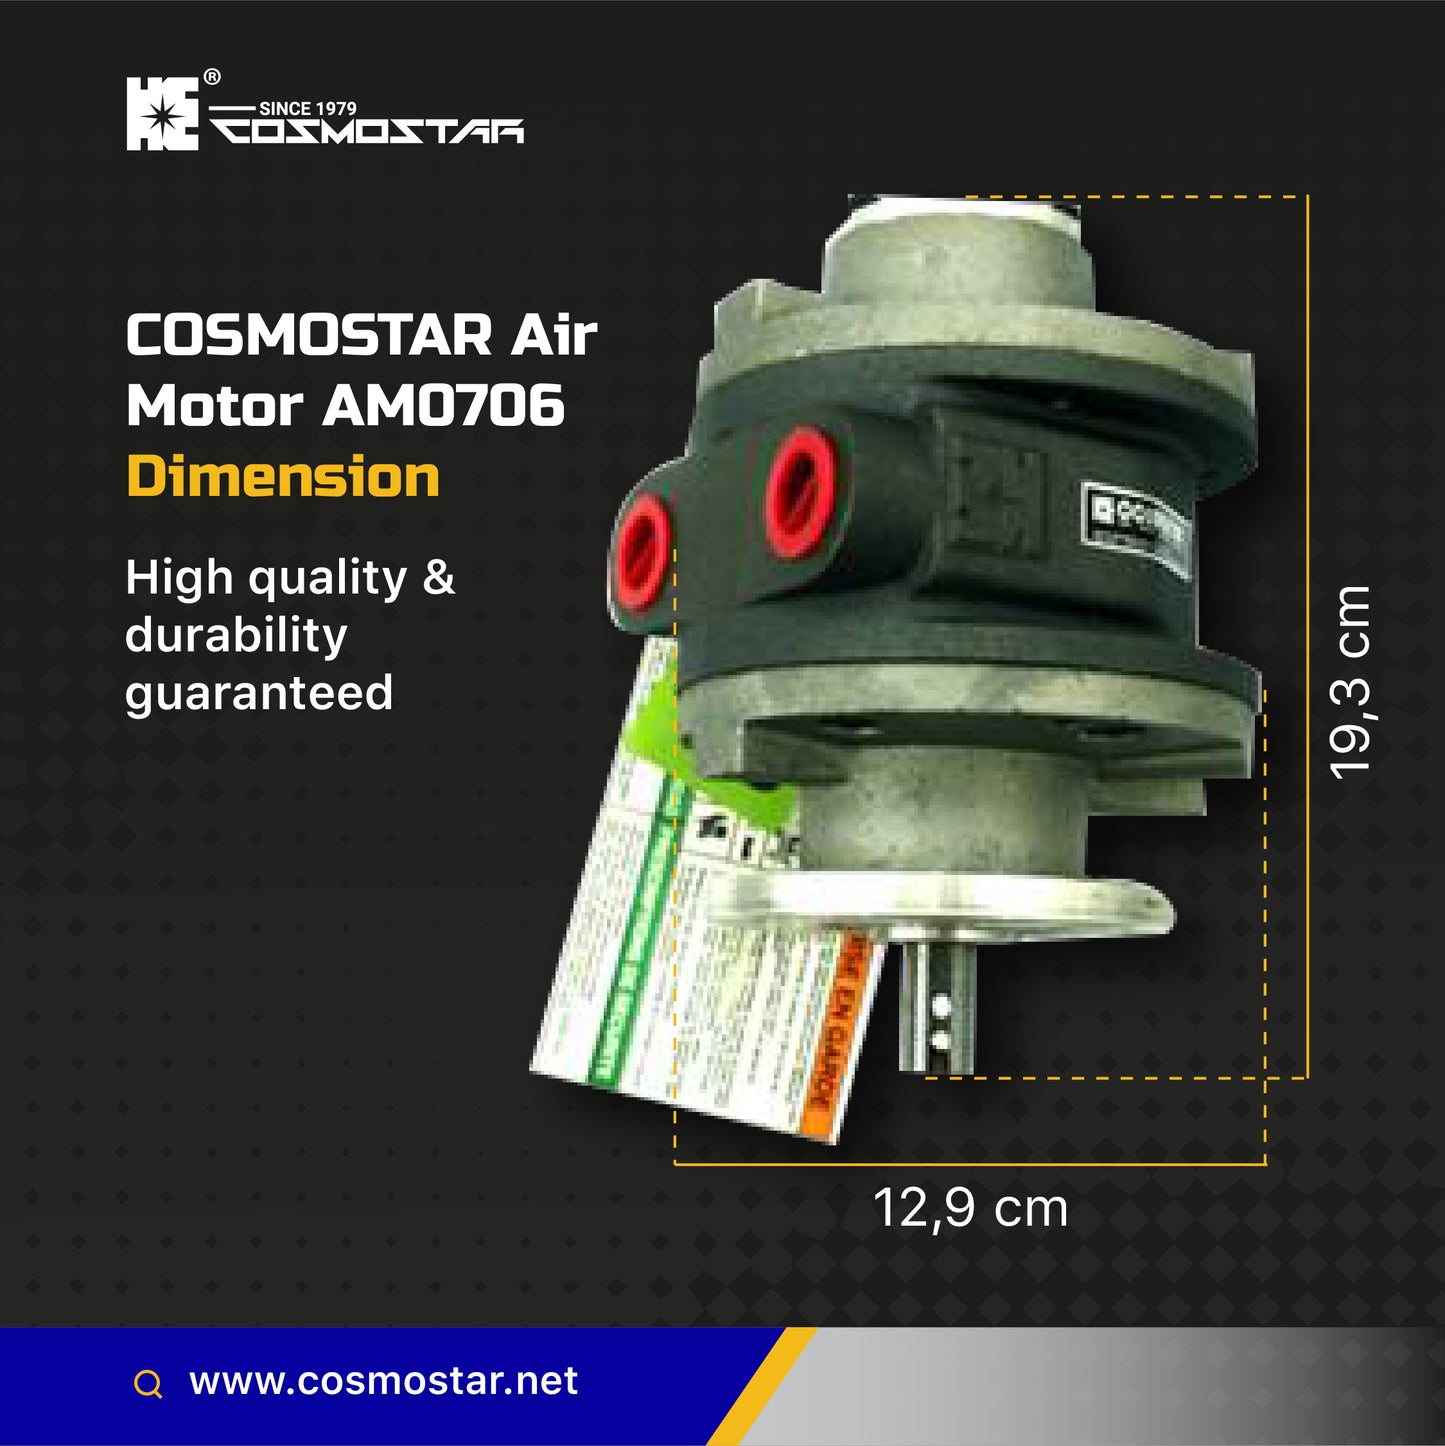 COSMOSTAR AM0706 3.6 HP Vane Type Air Motor